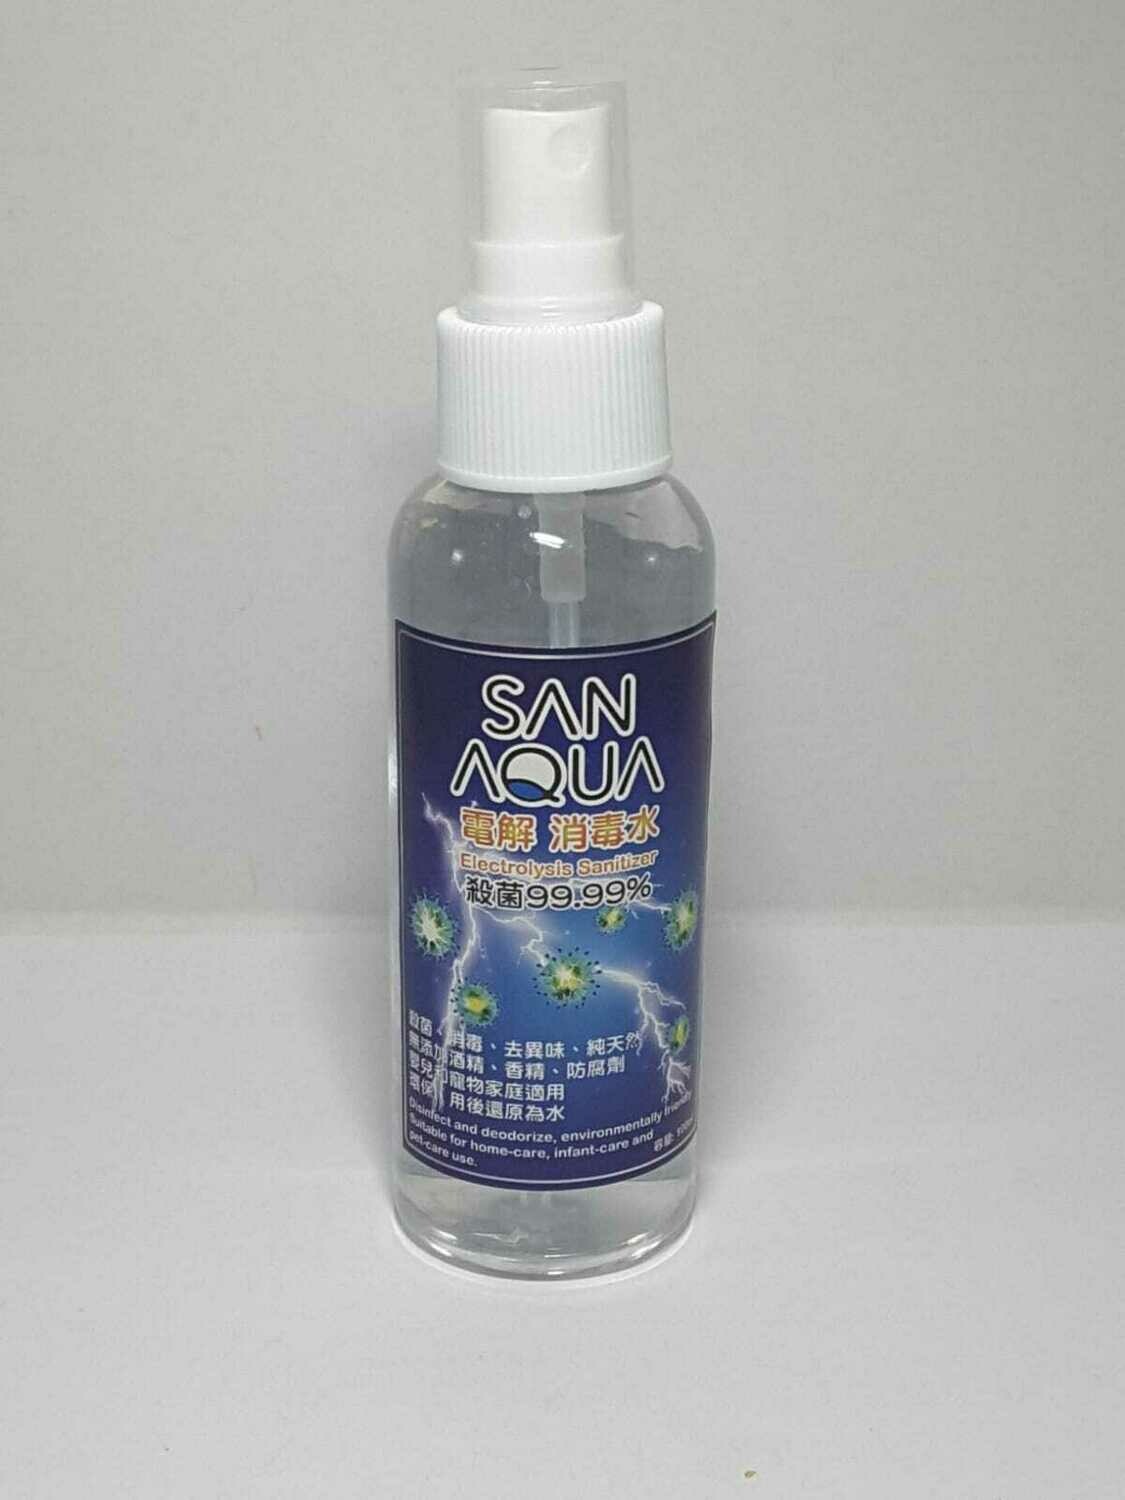 SanAqua 電解消毒水 便攜噴霧 100ml (試用價)

SanAqua Handy Bottle 100ml